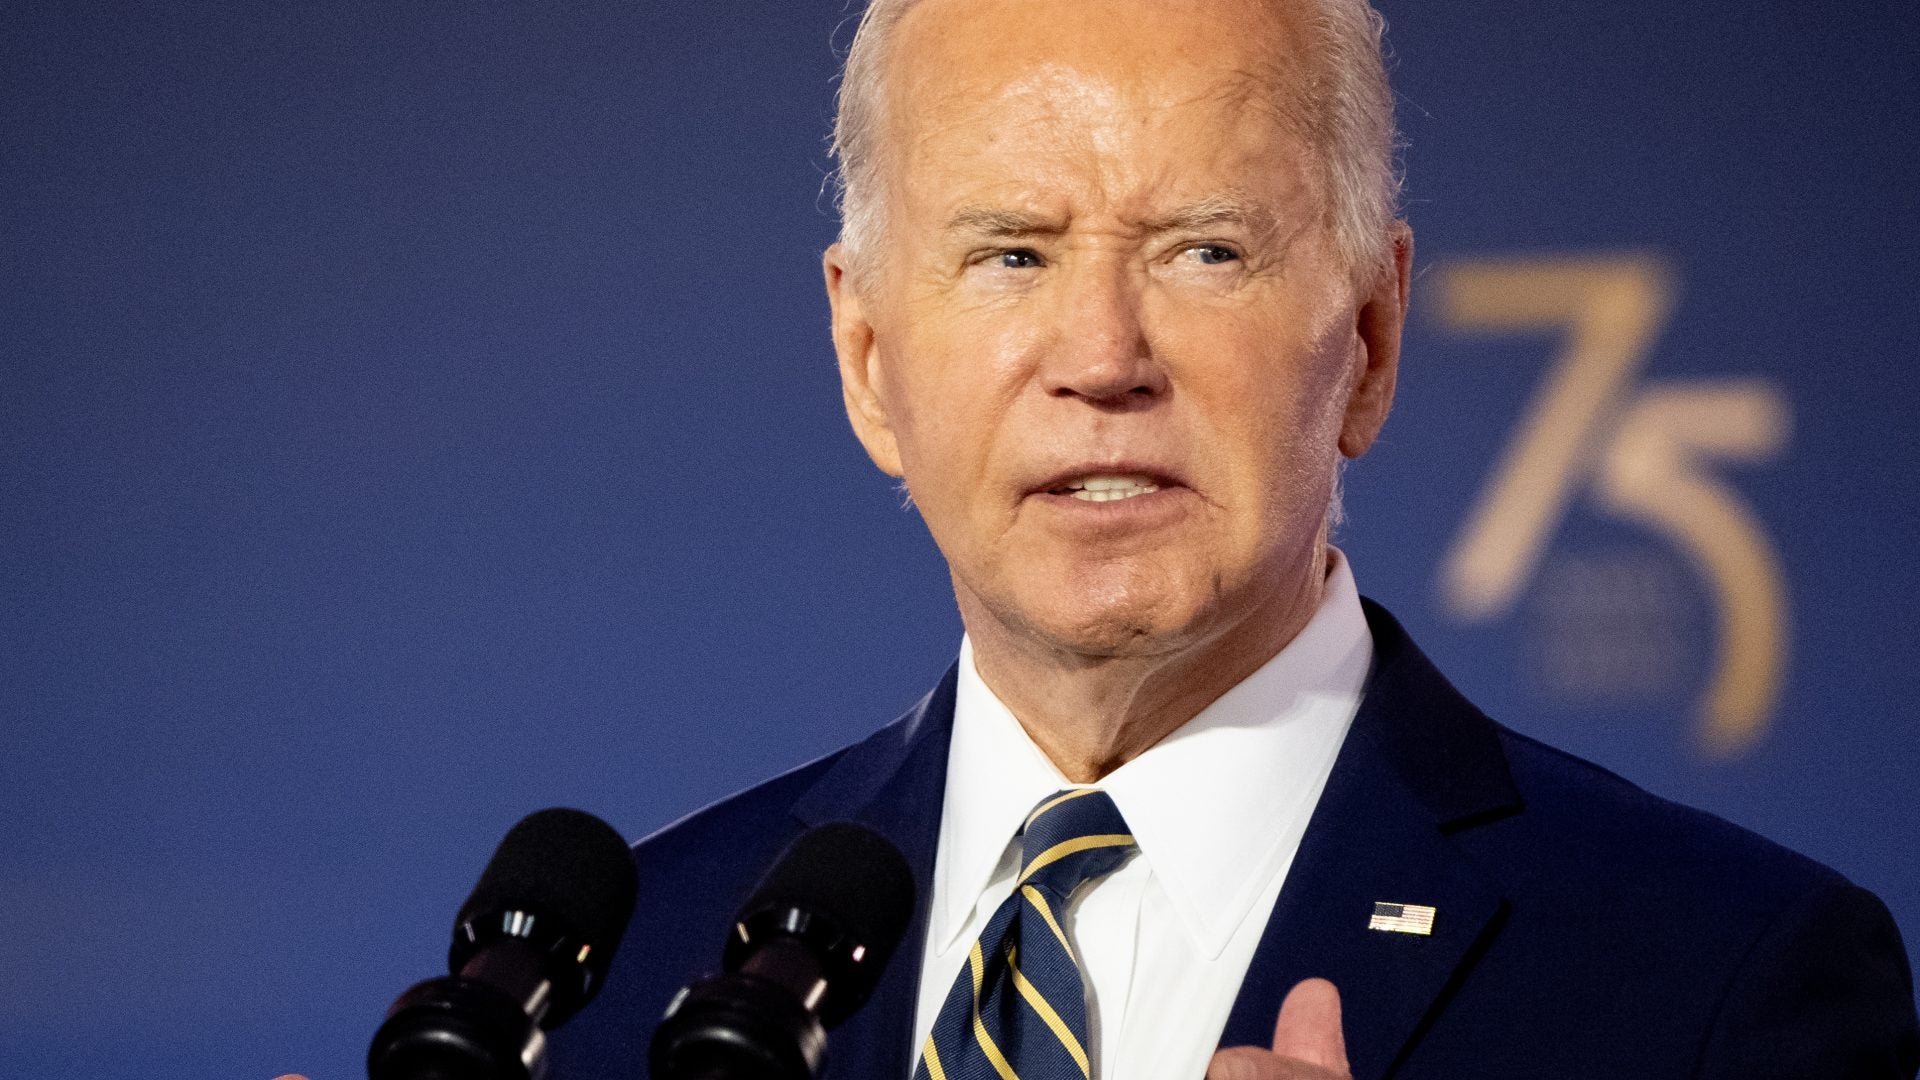 President Joe Biden Withdraws From 2024 Presidential Race, Endorses Kamala Harris